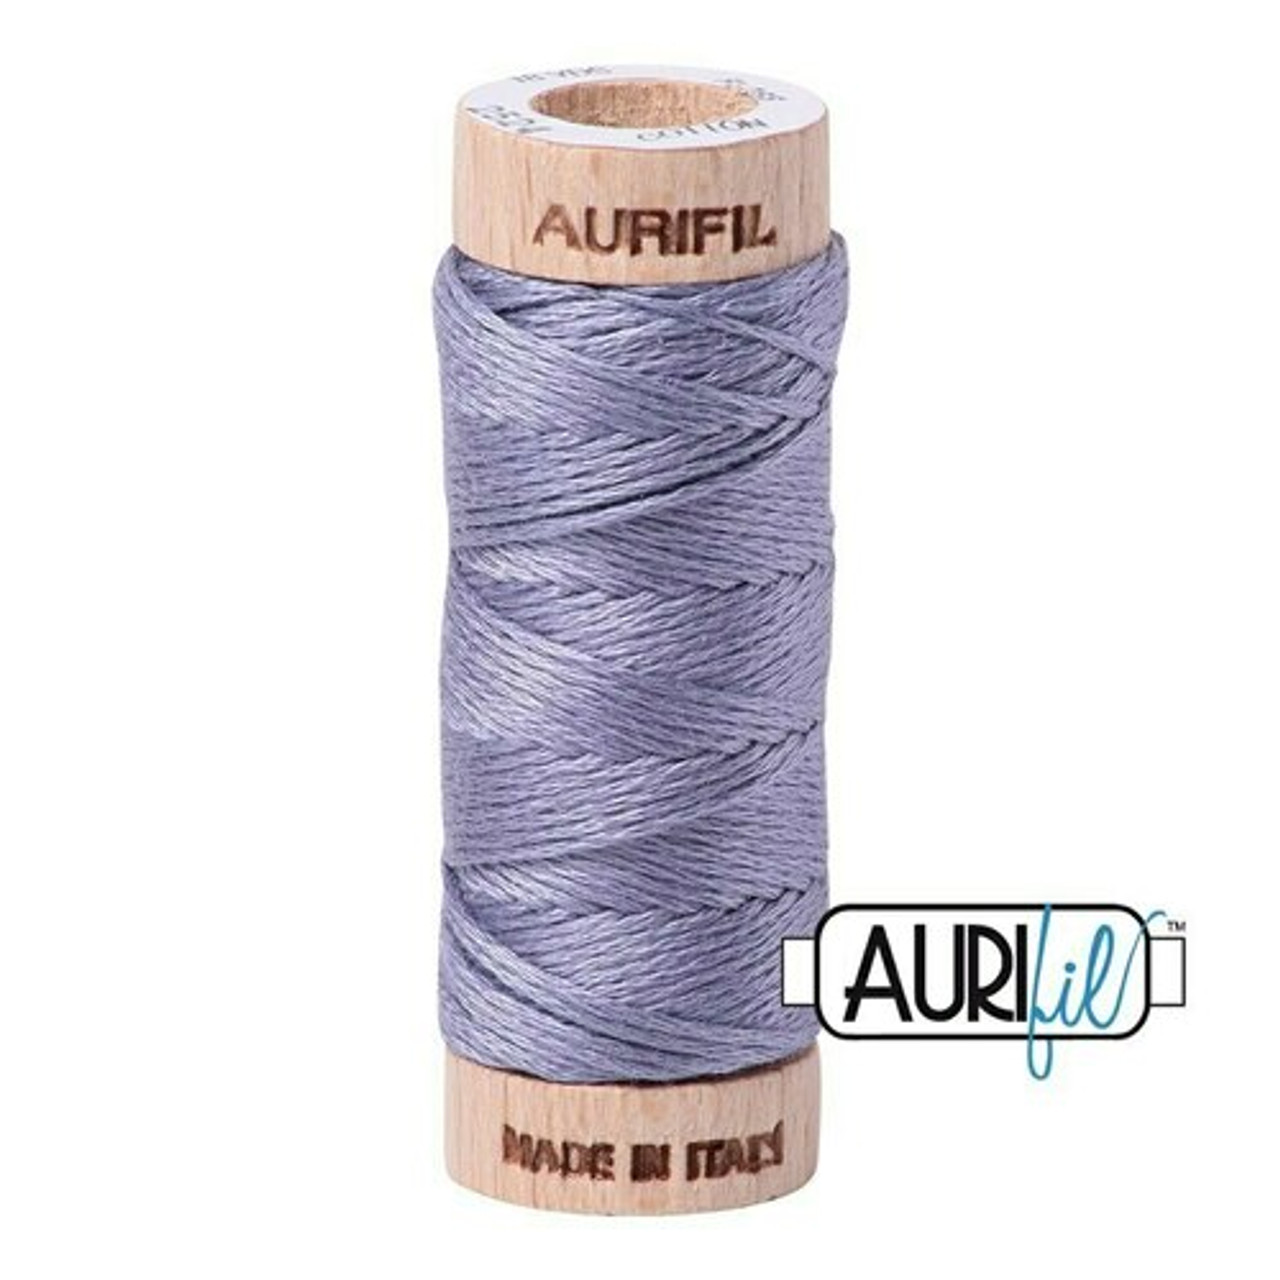 Aurifil 2524 - Grey Violet